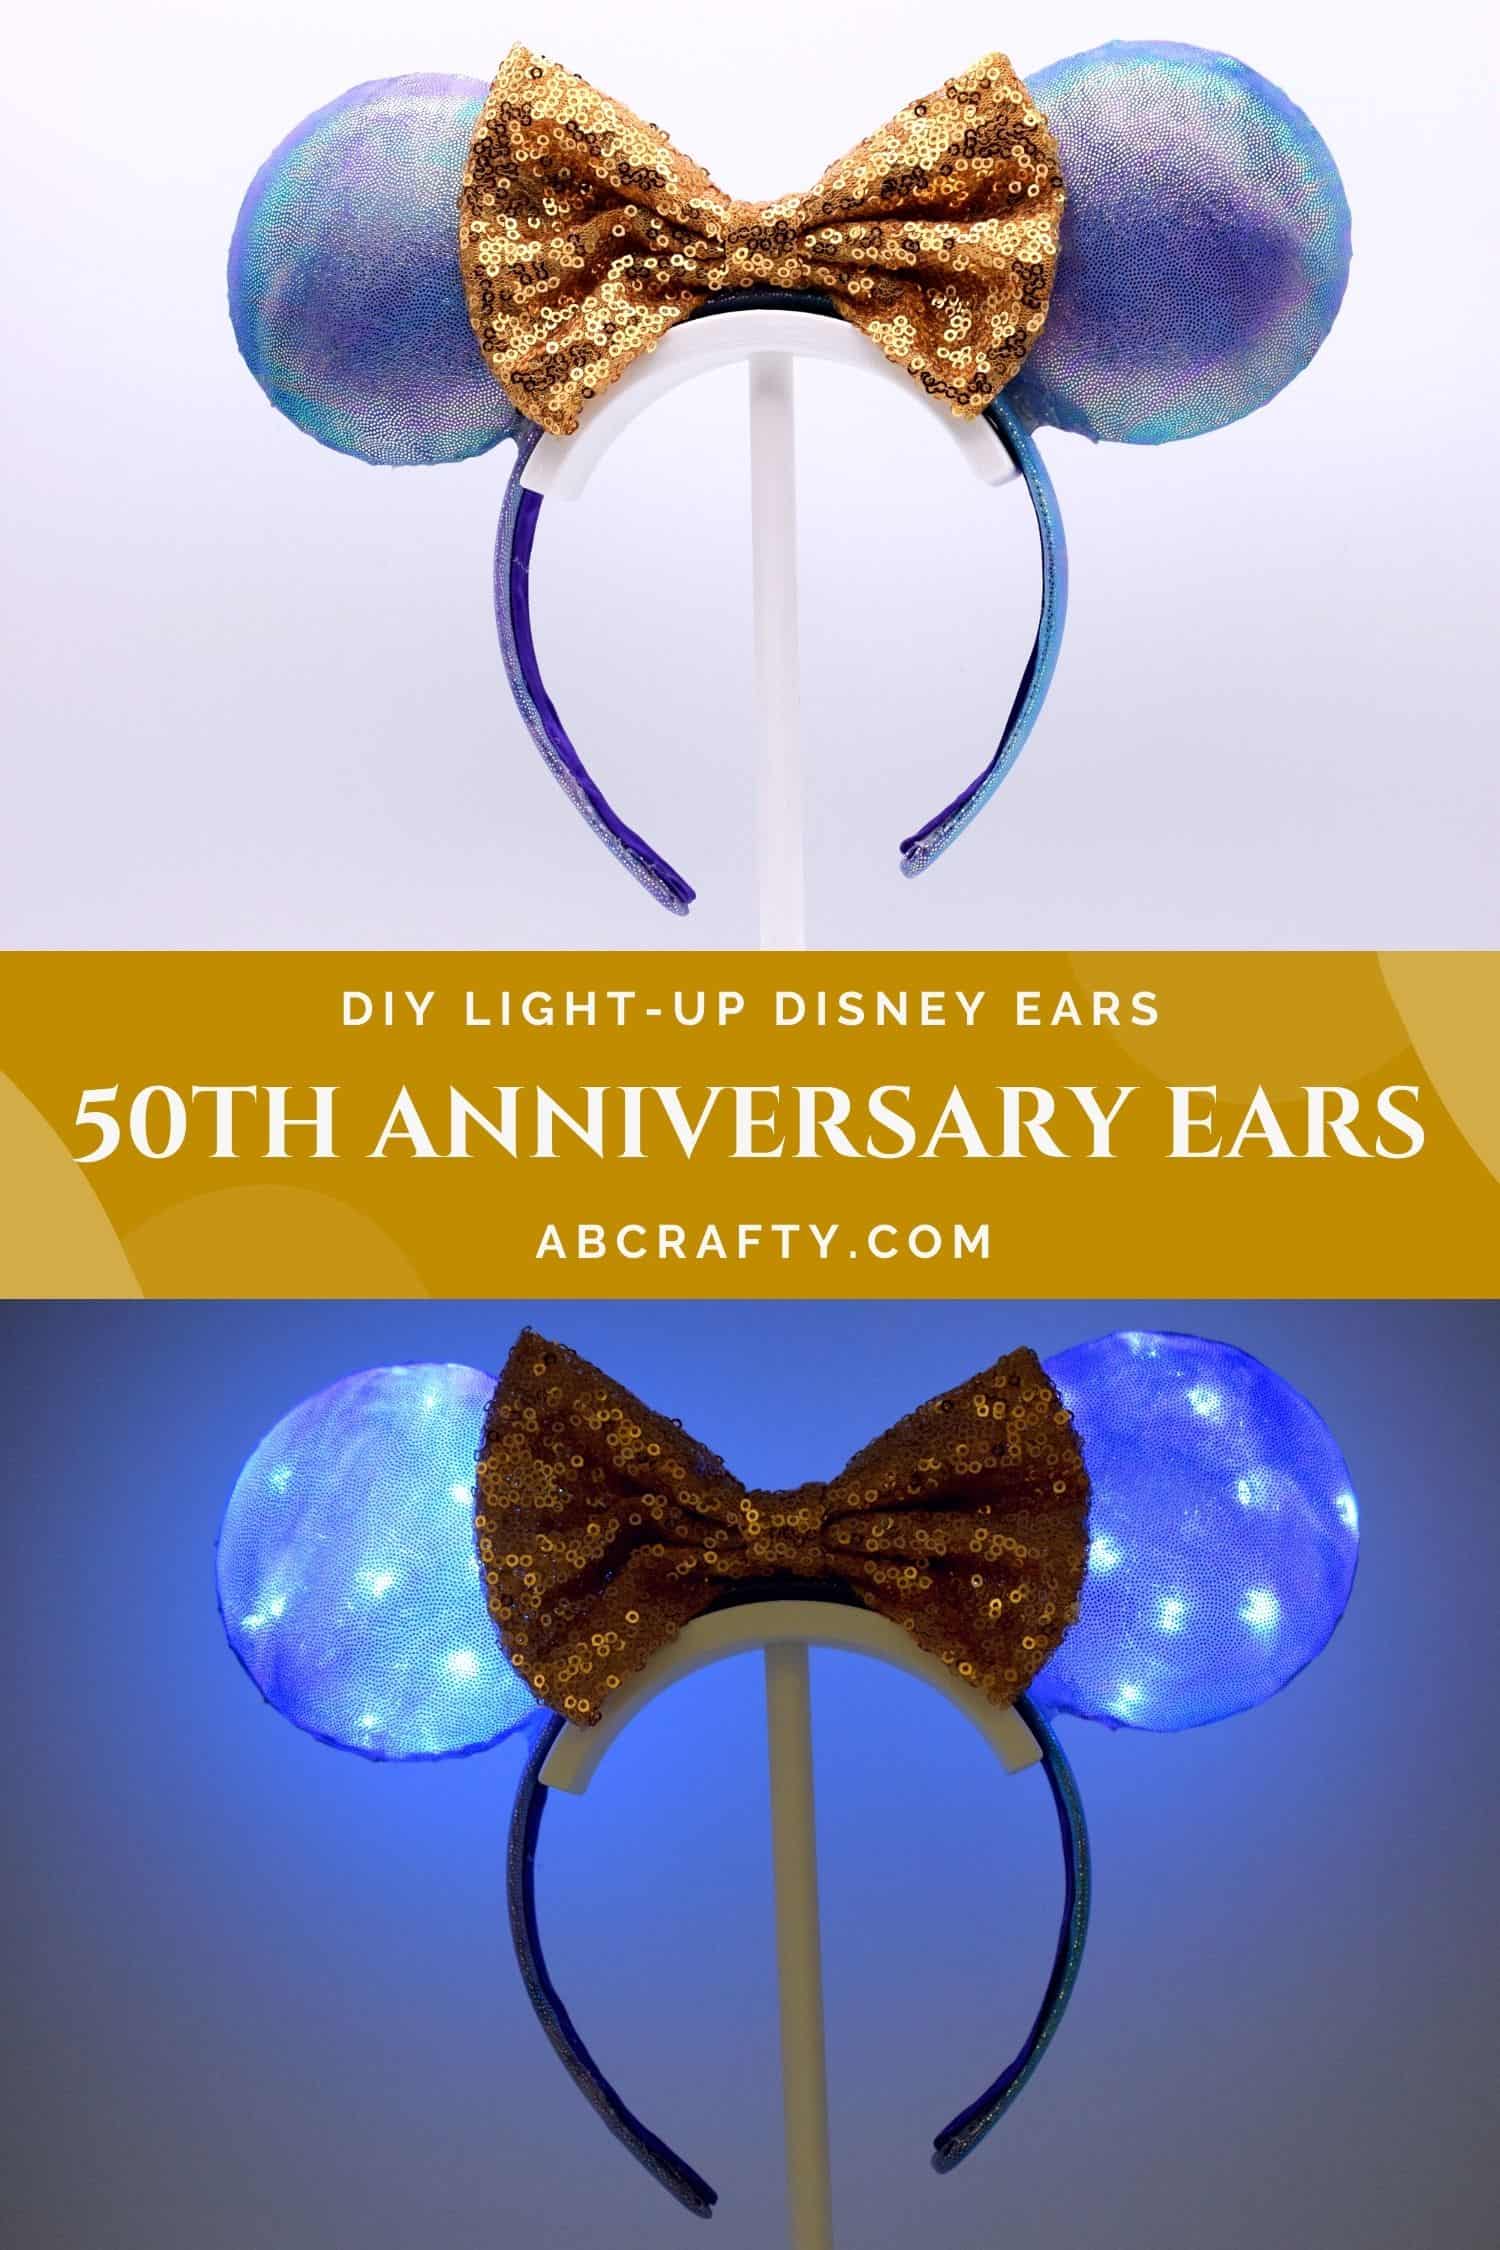 Celebration 50th Anniversary Ears Disney World 50th Ears Mickey Anniversary Ears .